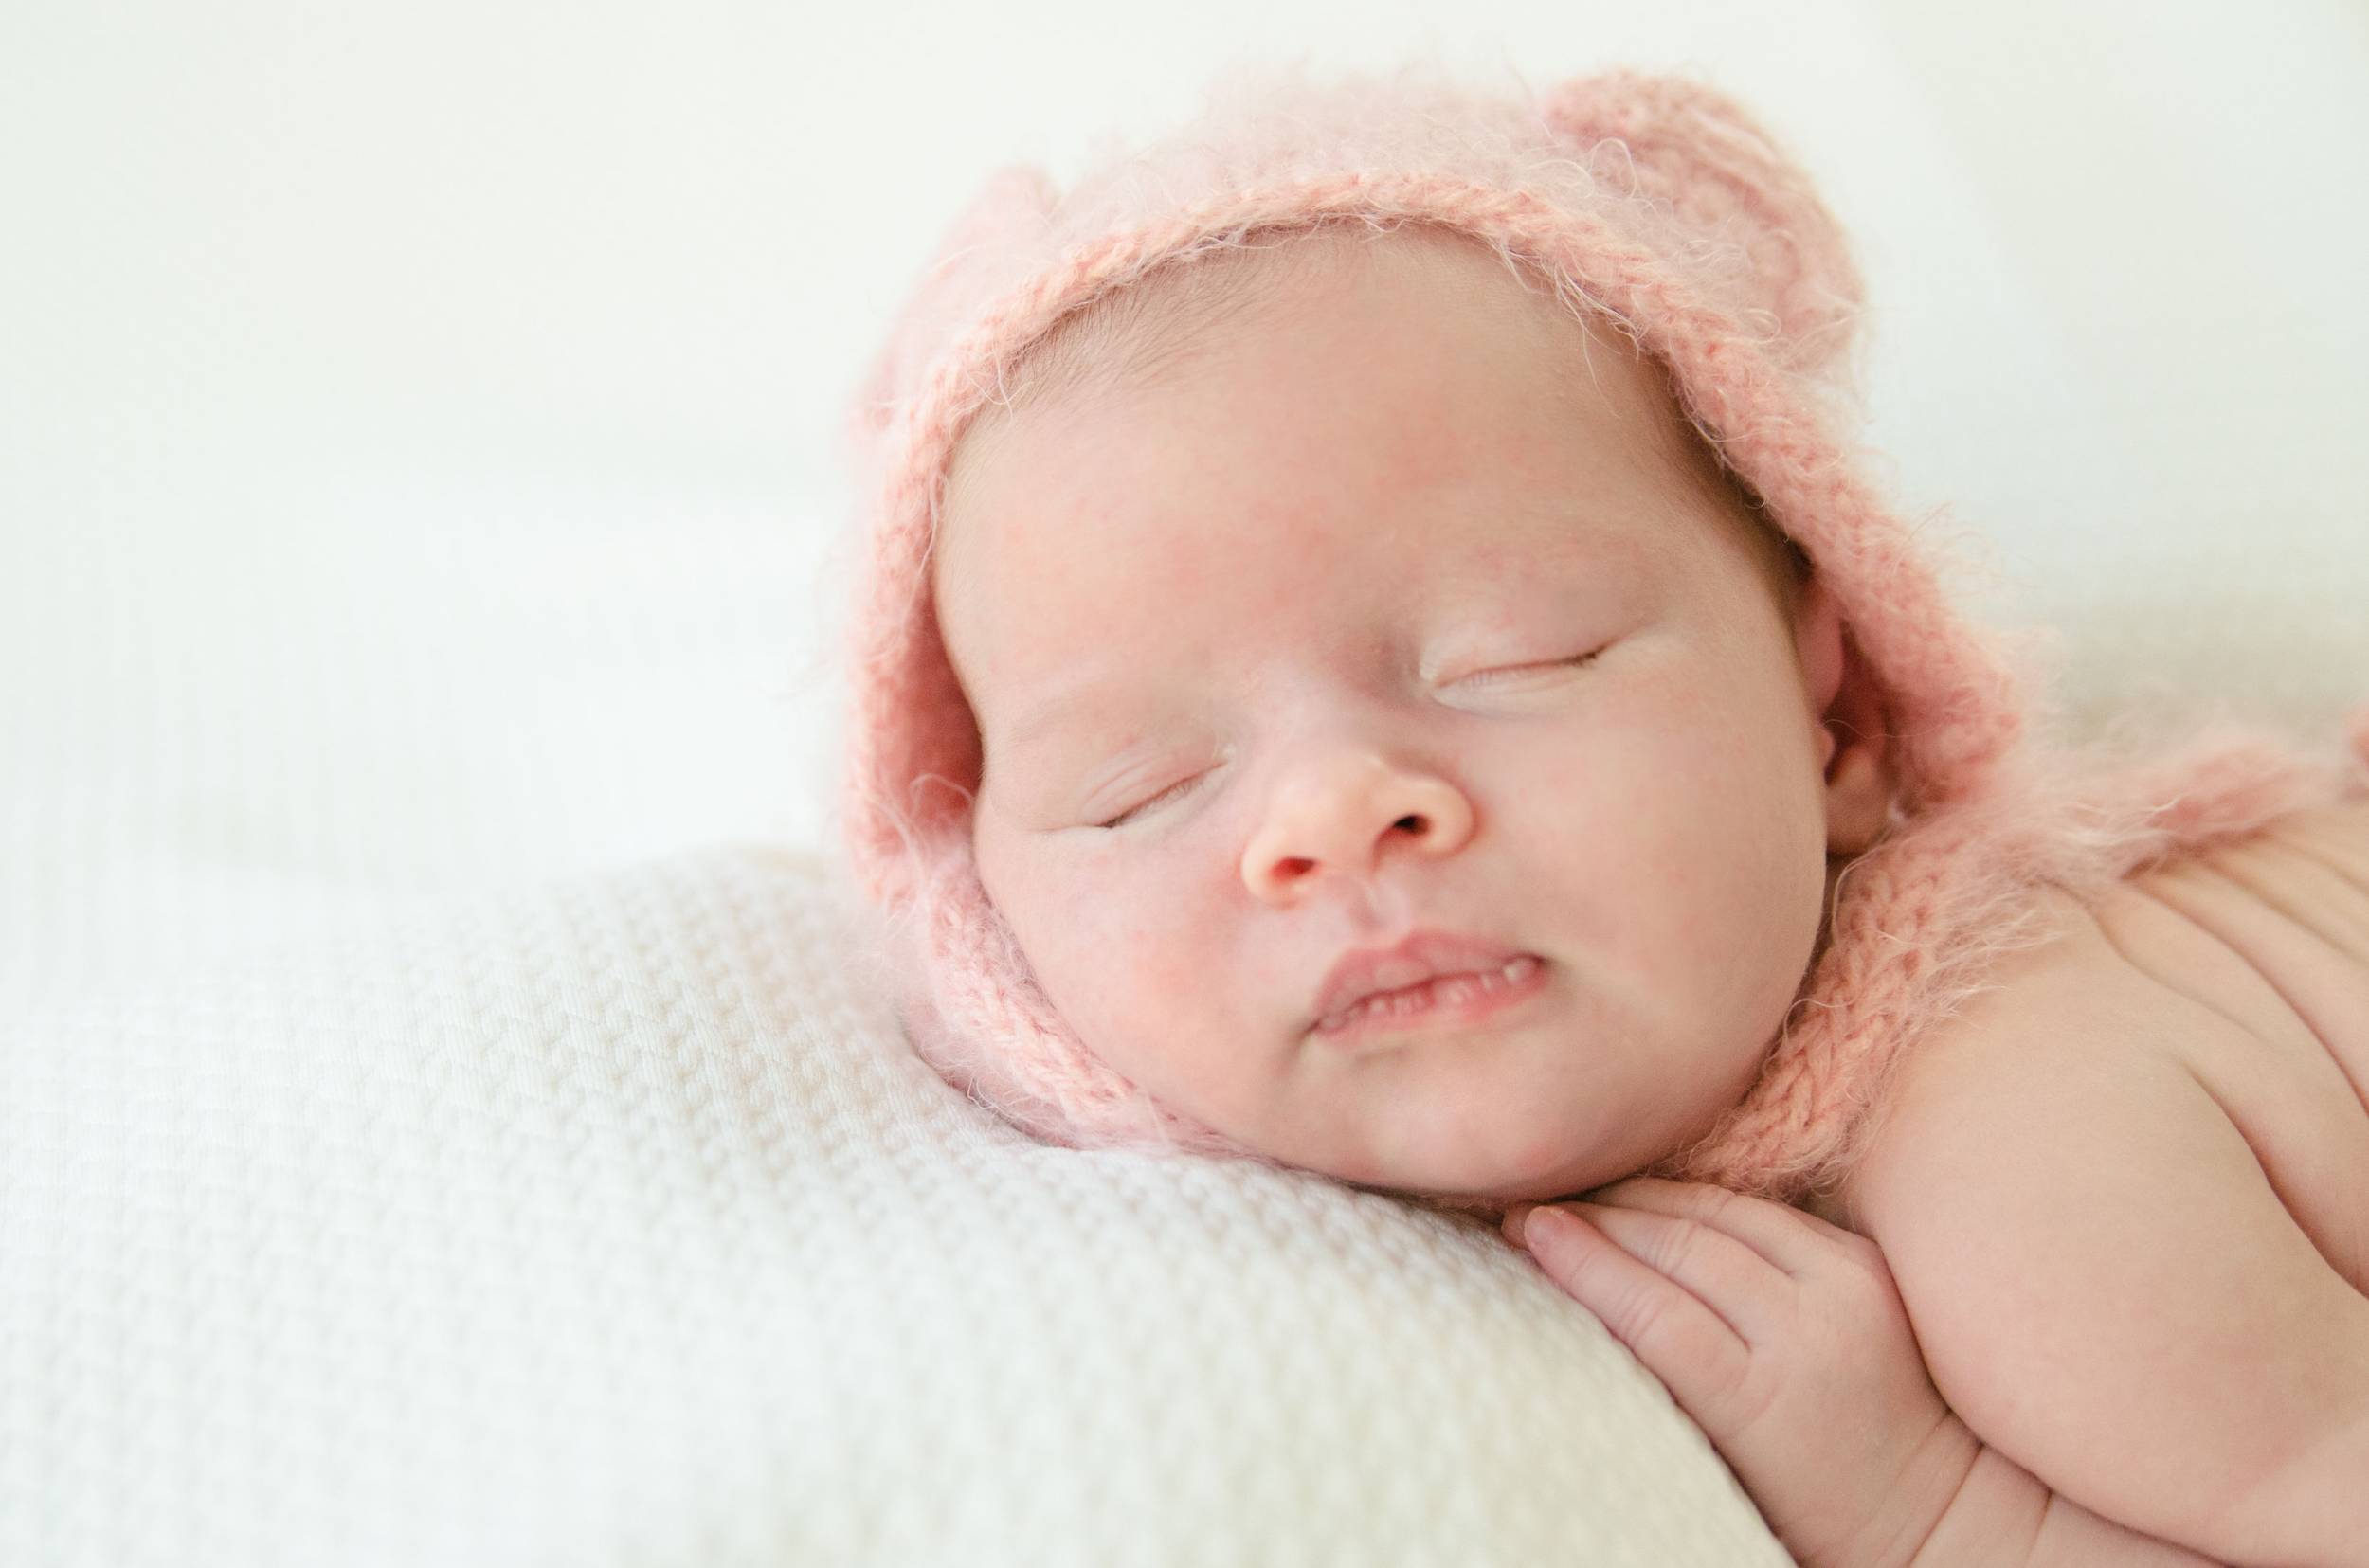 Happix-fotograaf-Feodora-Nijkerk-Newborn-_-Baby-fotografie-017_HN32_OK_VmI.jpg